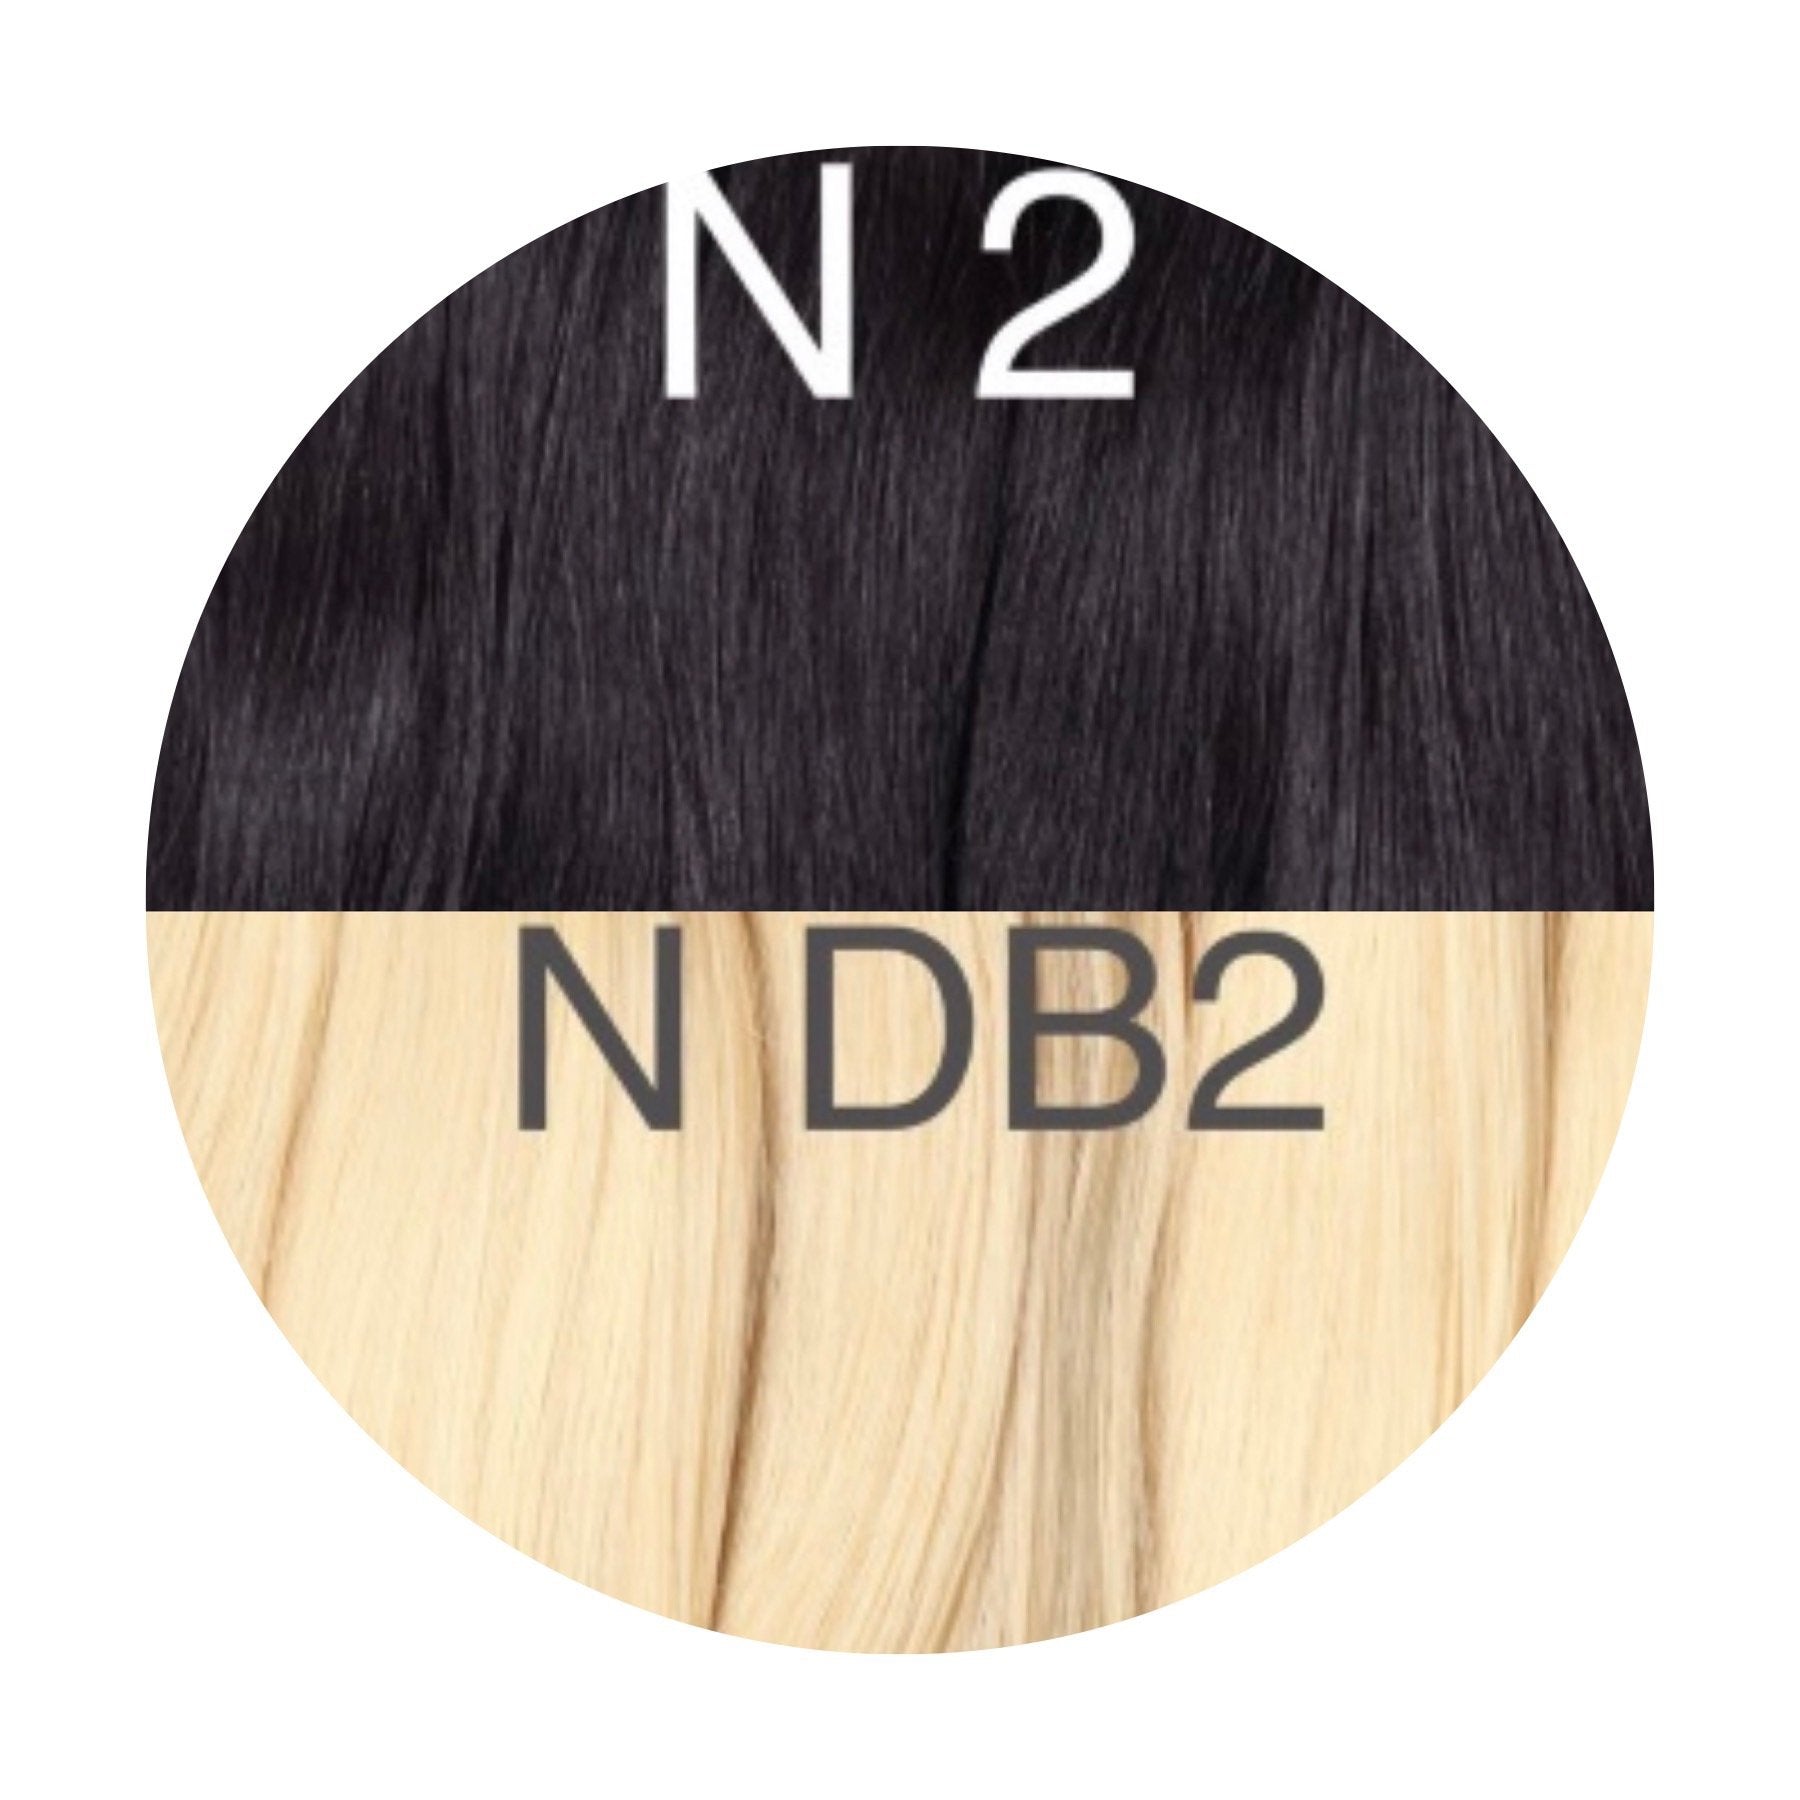 Wigs Ombre 2 and DB2 Color GVA hair_Retail price - GVA hair